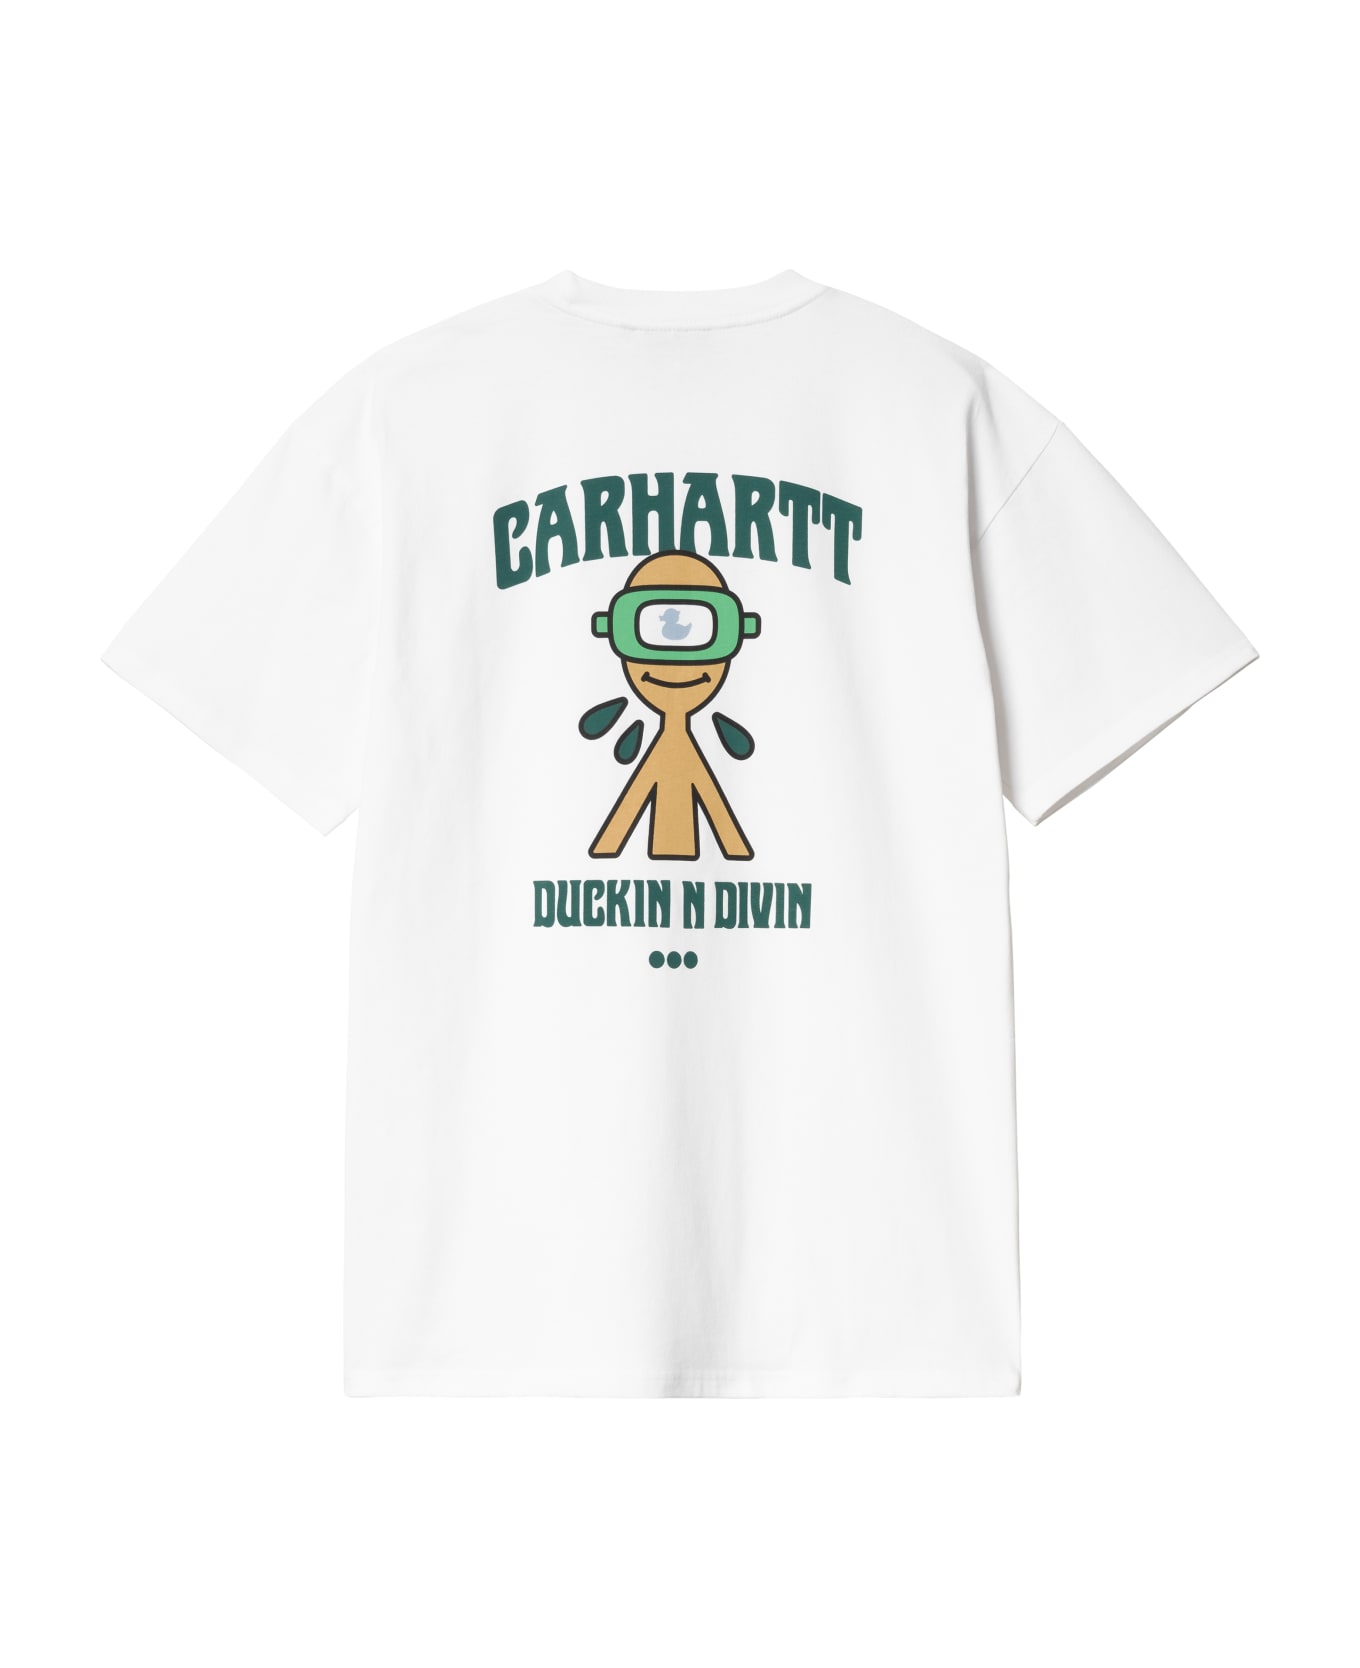 Carhartt S S Duckin T-shirt - Yqgd Acapulco